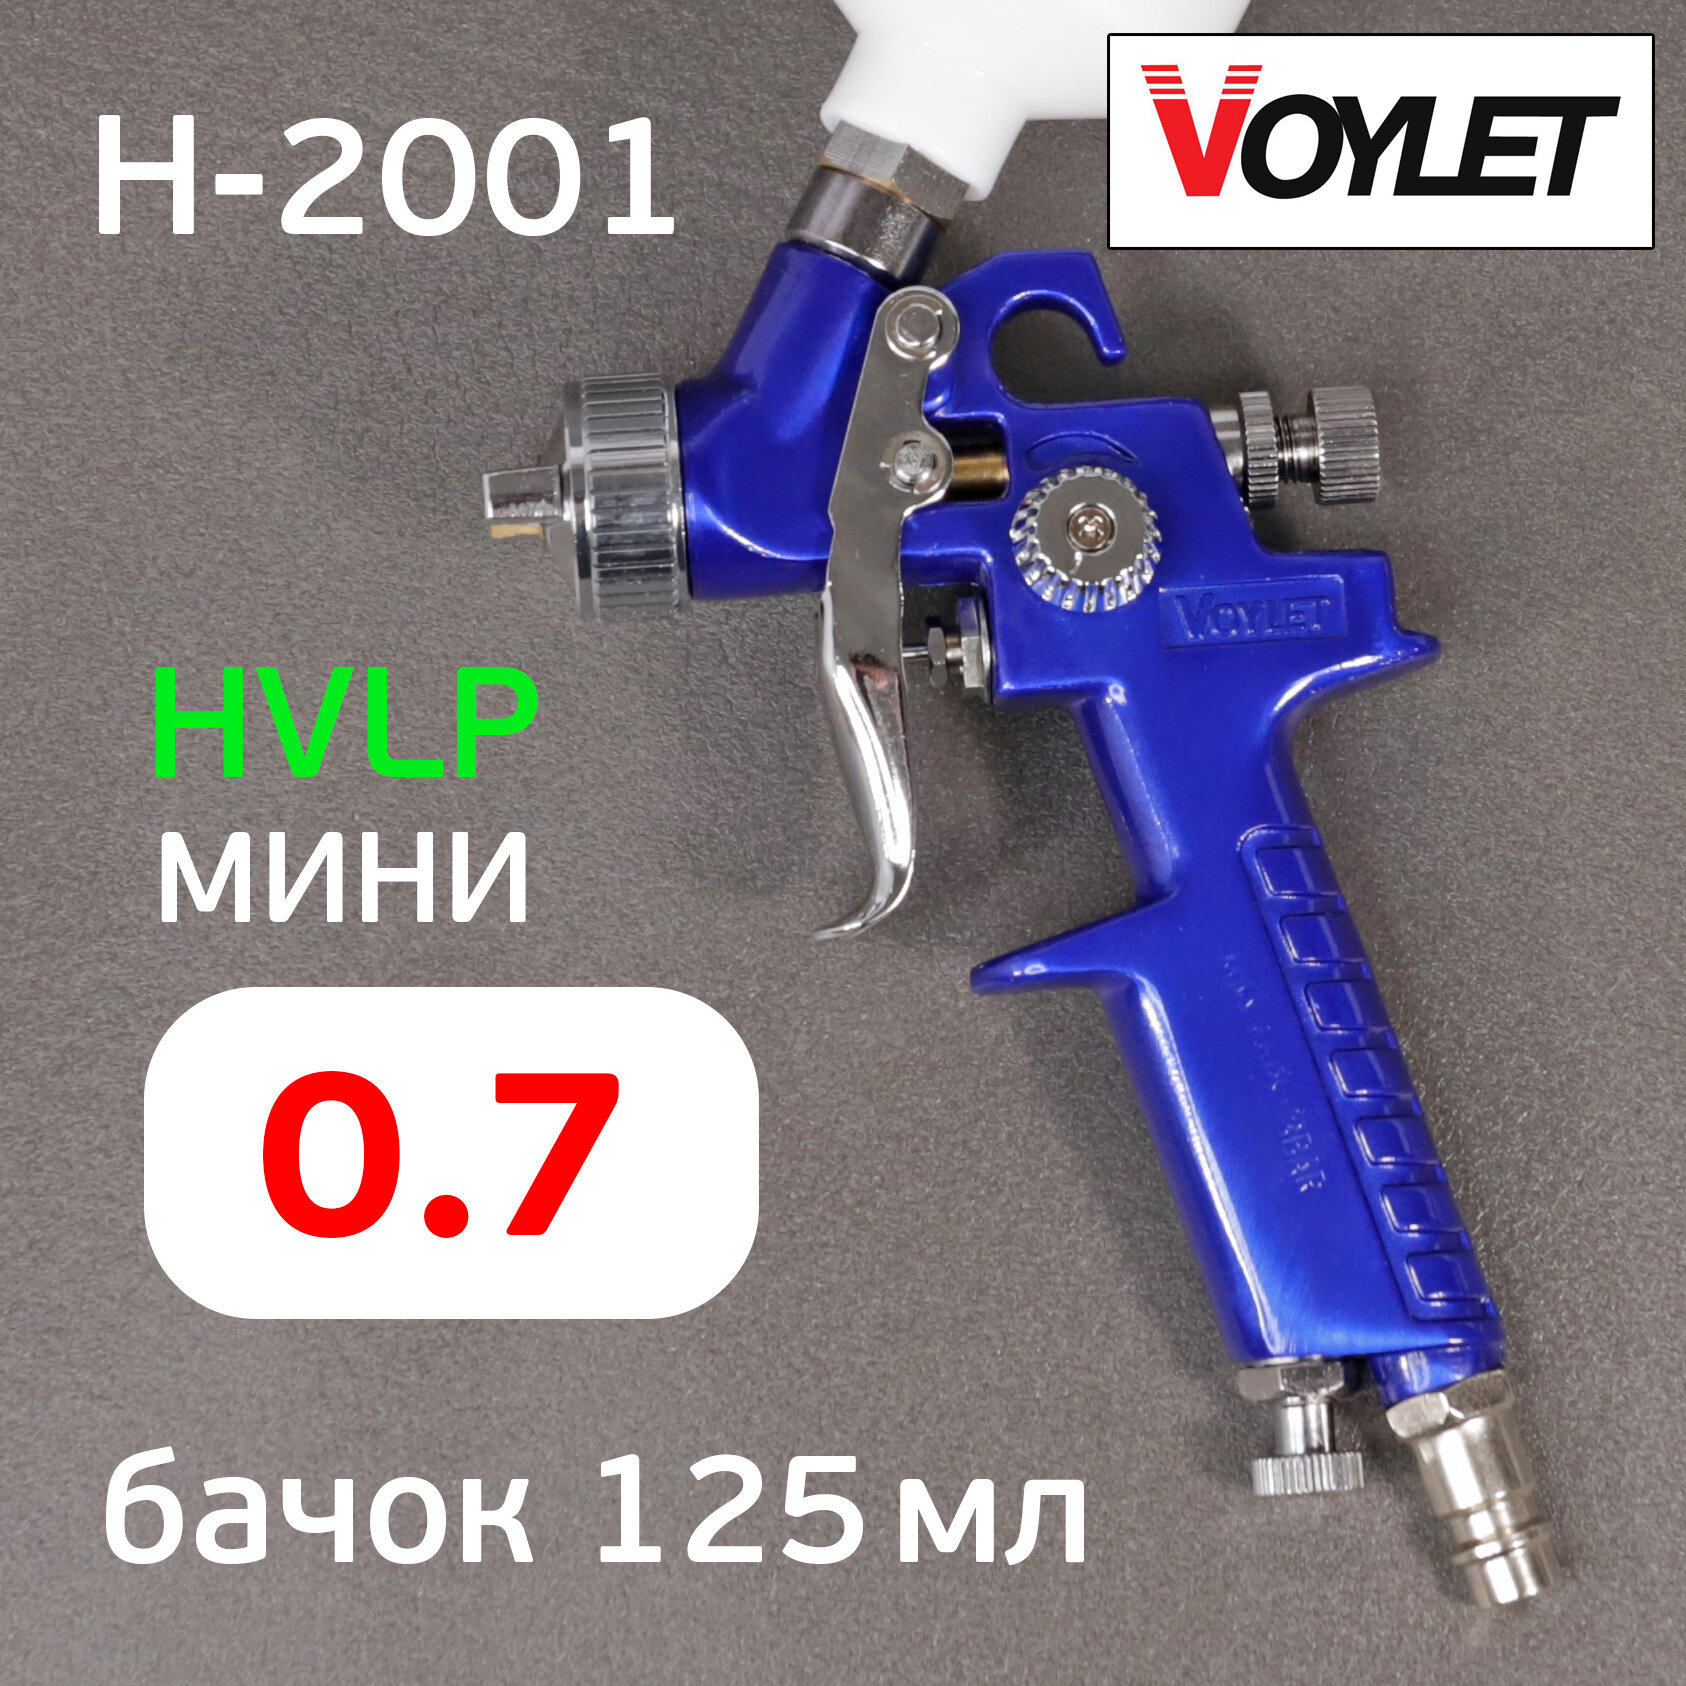 Краскопульт Voylet H-2001 (0.7мм) мини, HVLP, верхний бачок 125мл